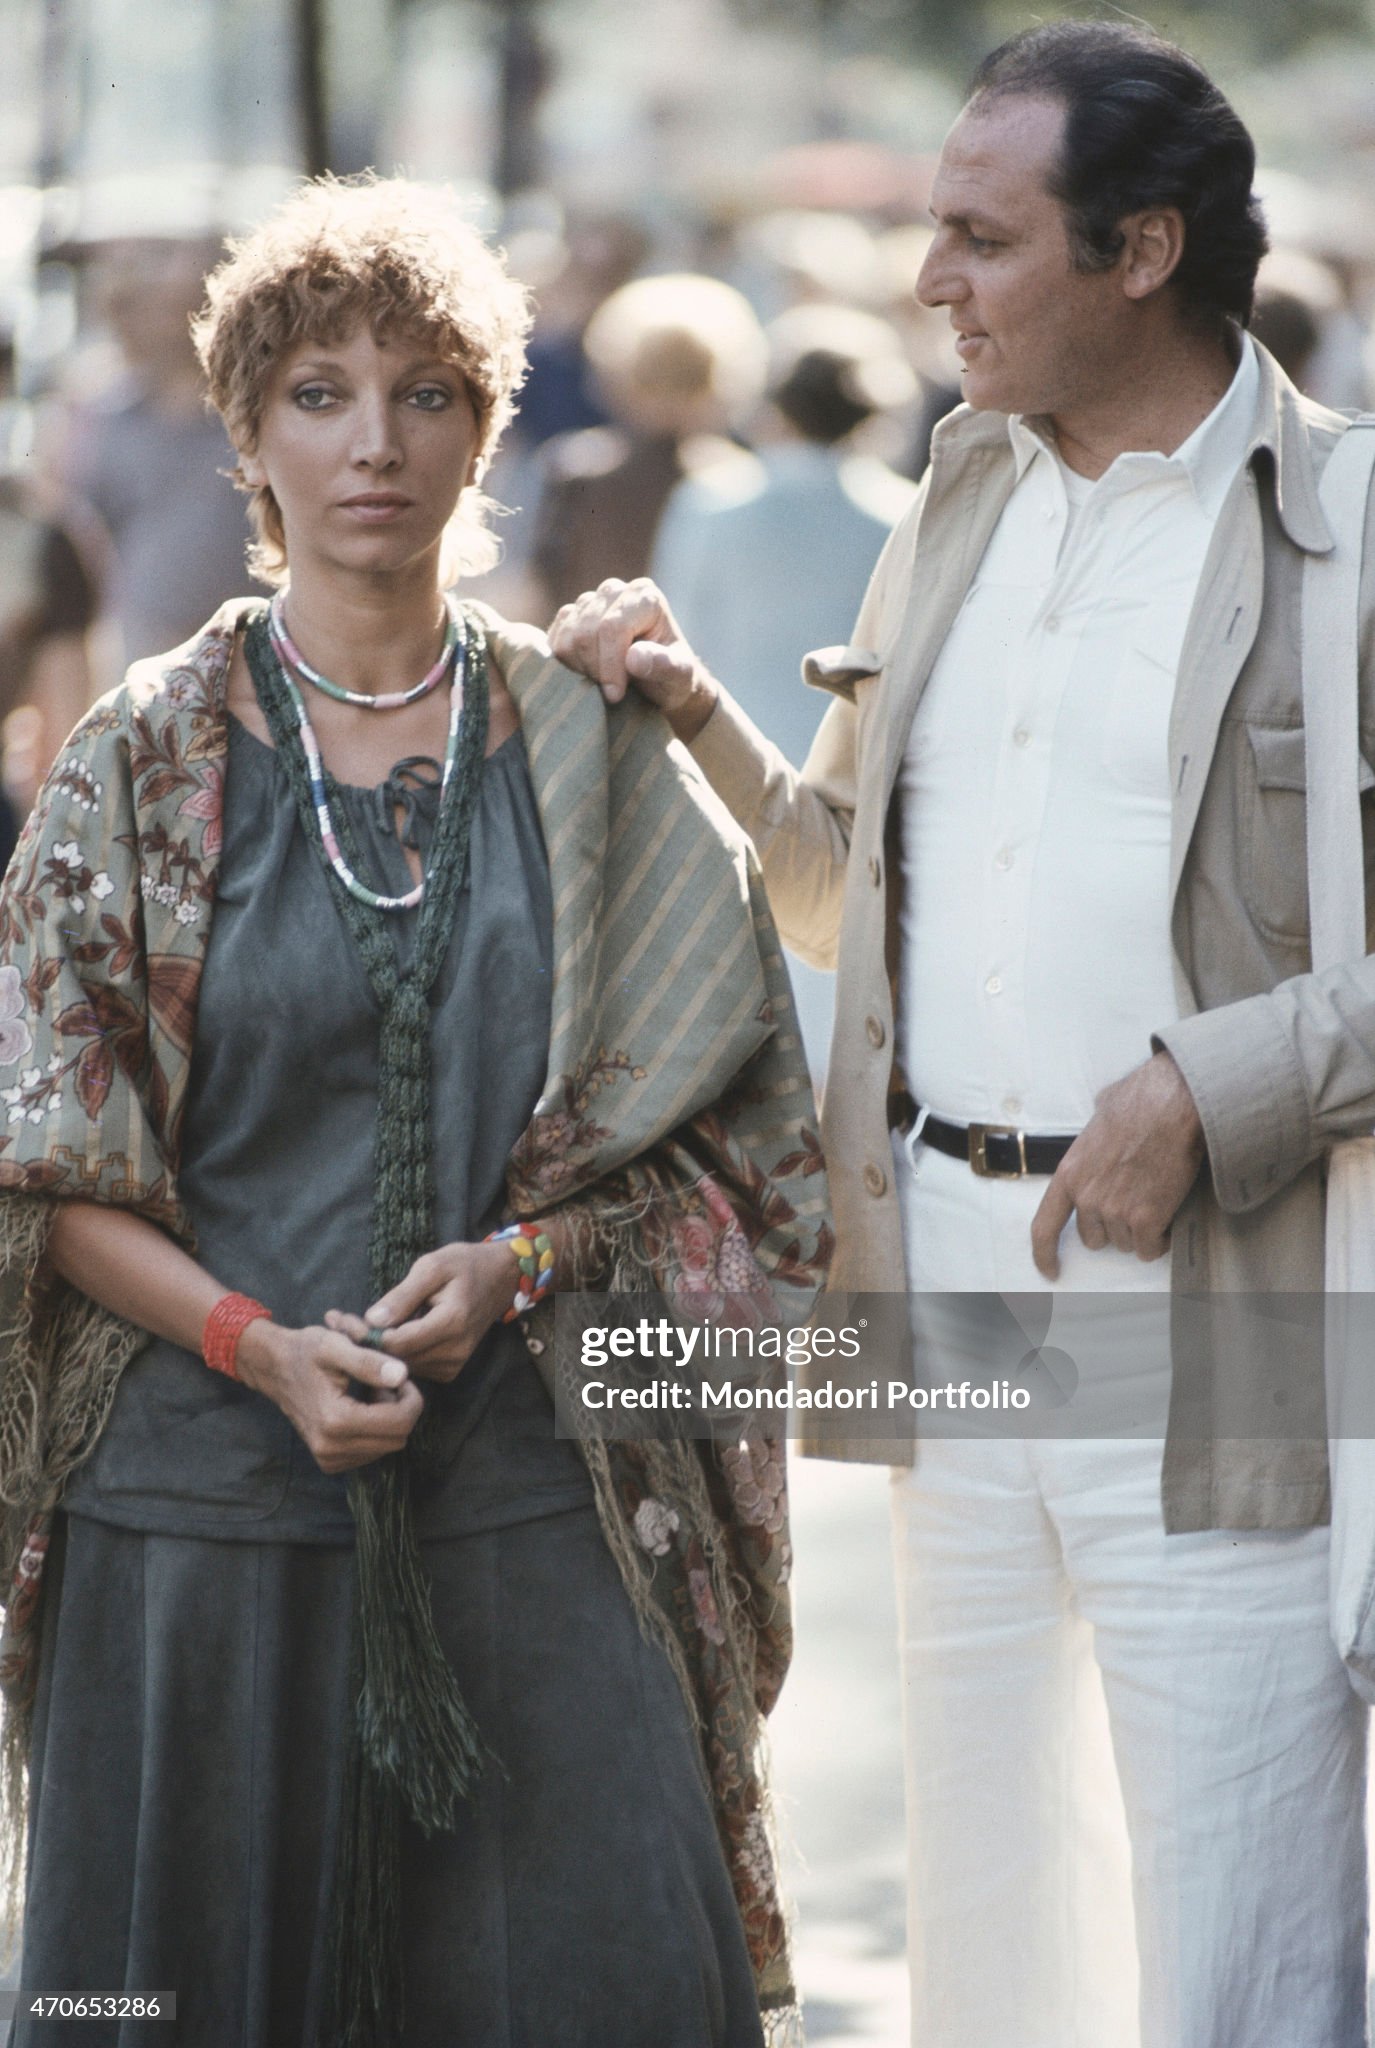 Renzo Arbore and his partner Mariangela Melato at Berlin, Germany, in 1977. 